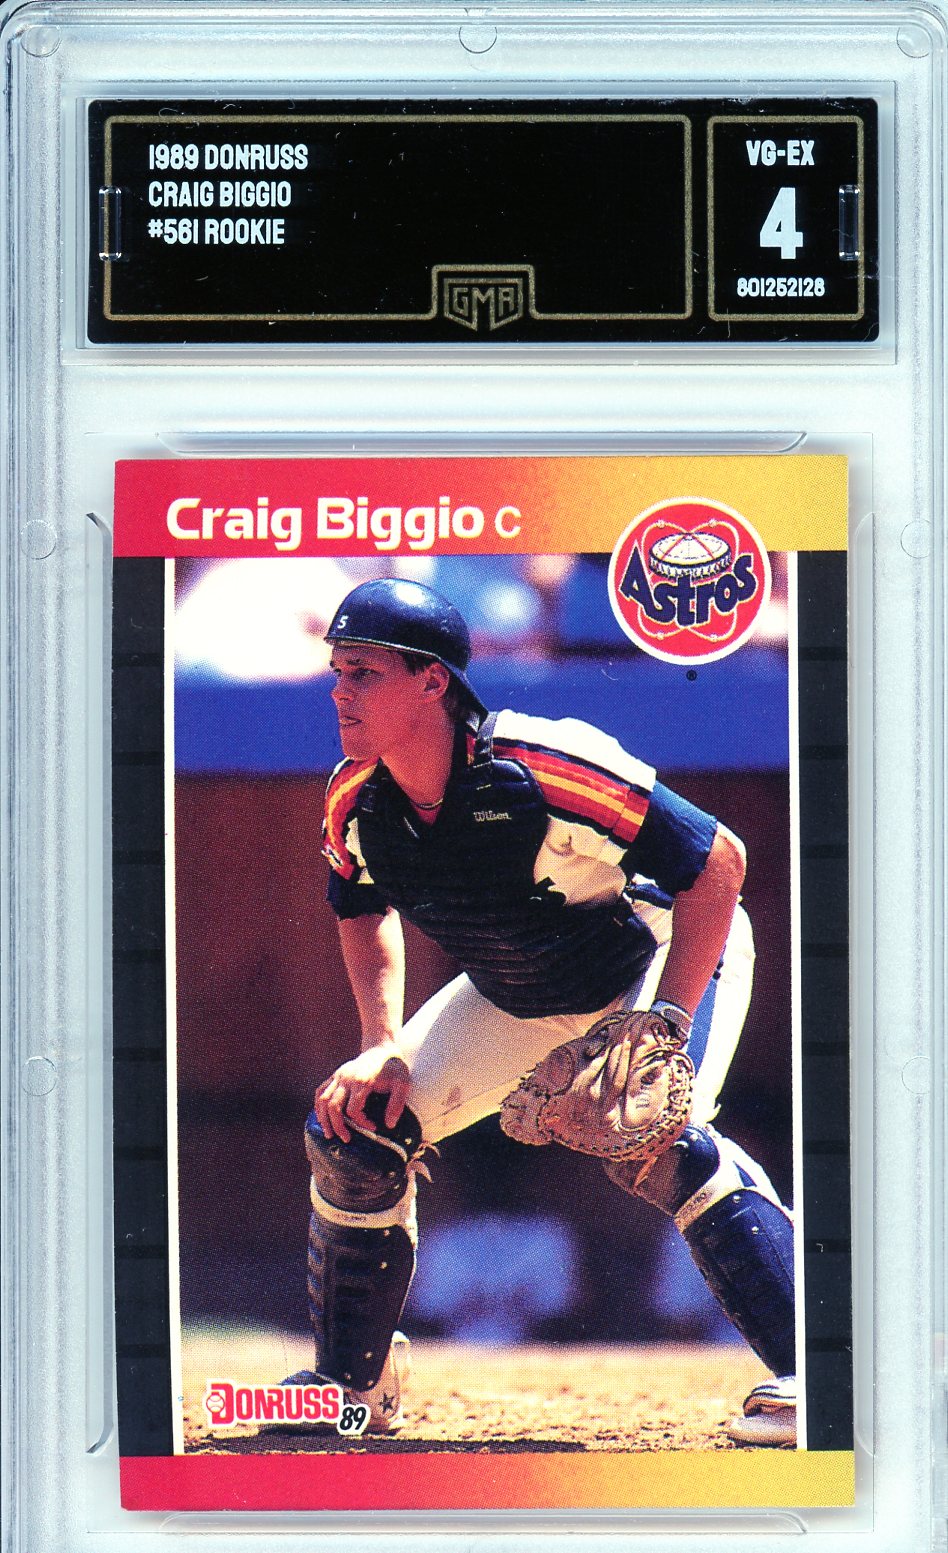 1989 Donruss #561 Craig Biggio Rookie Card GMA 4